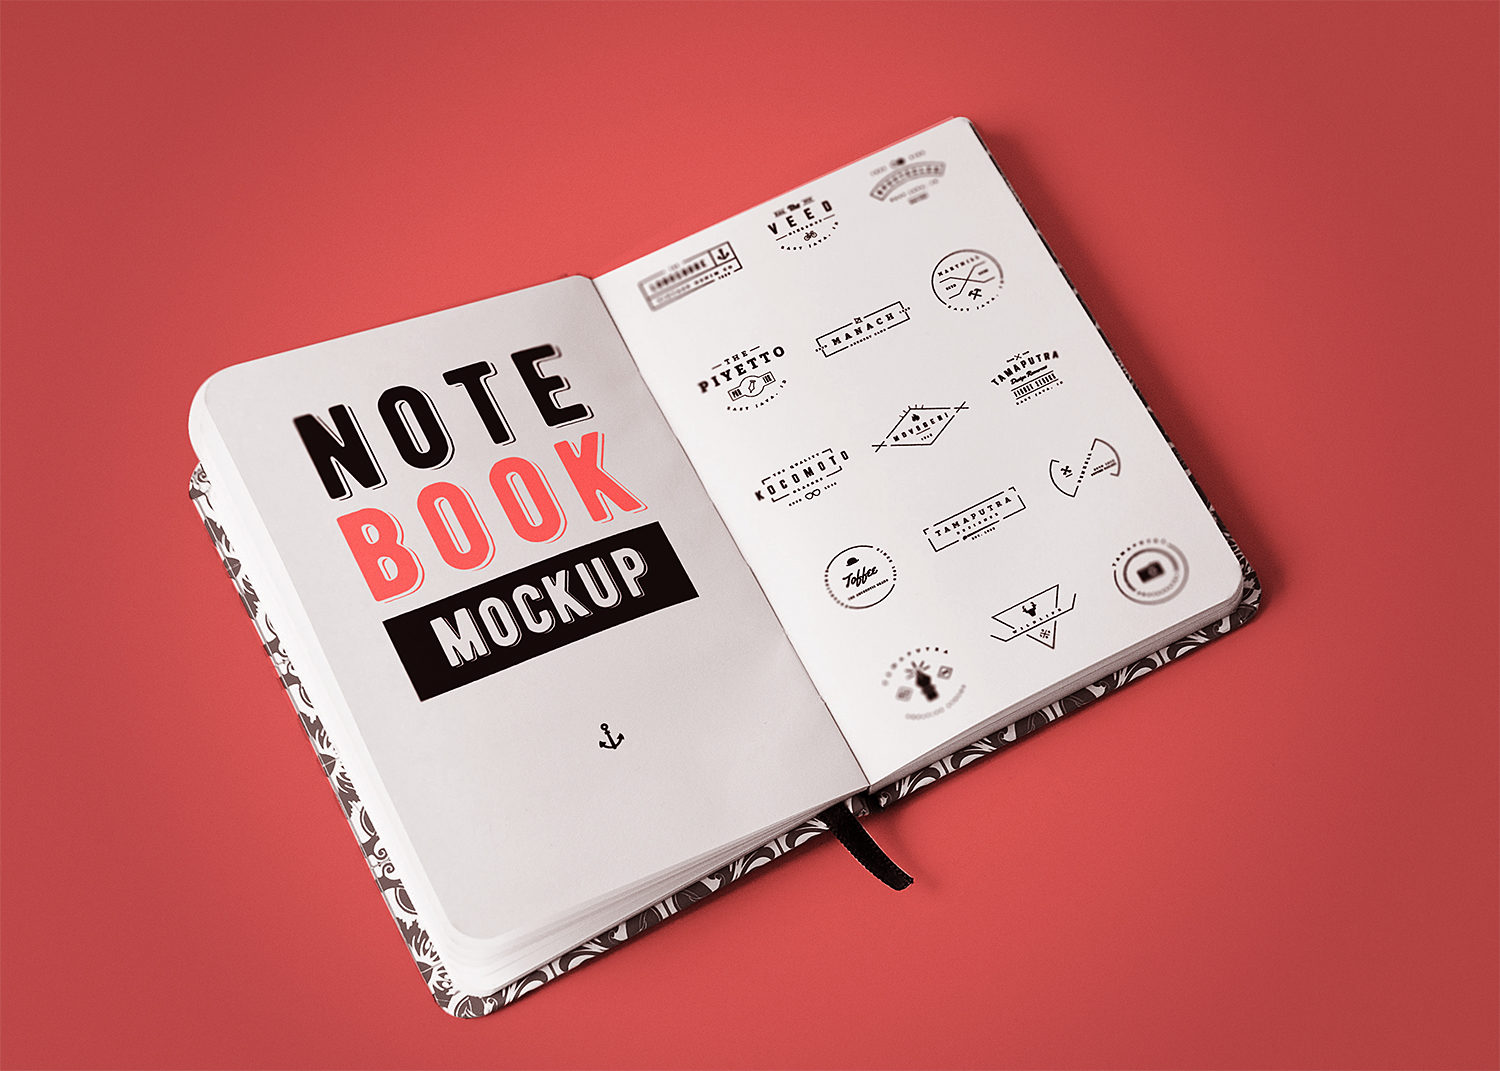 Free Open Notebook Mockup